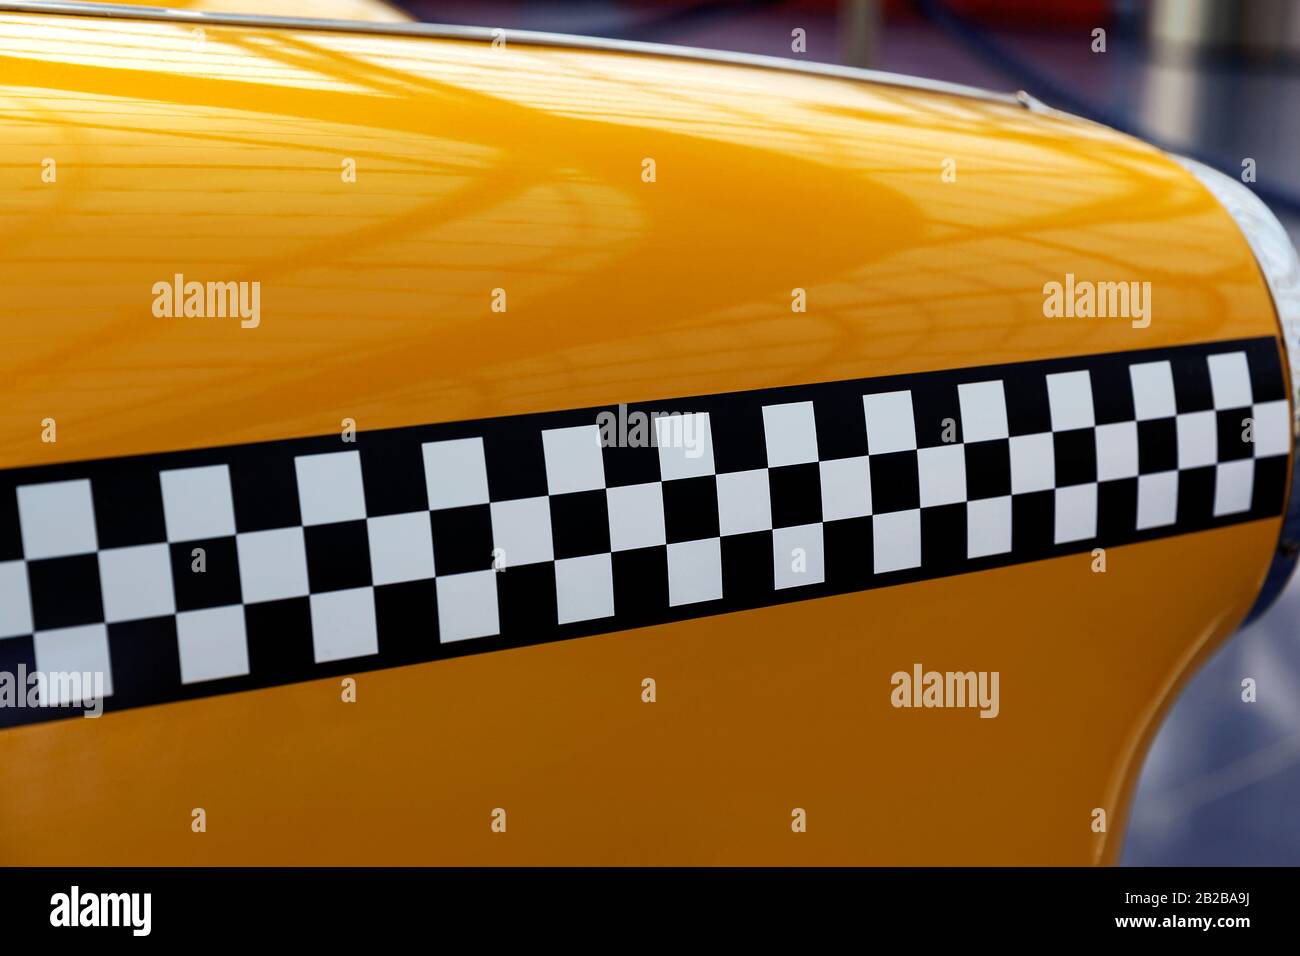 checker pattern of an retro taxi auto Stock Photo